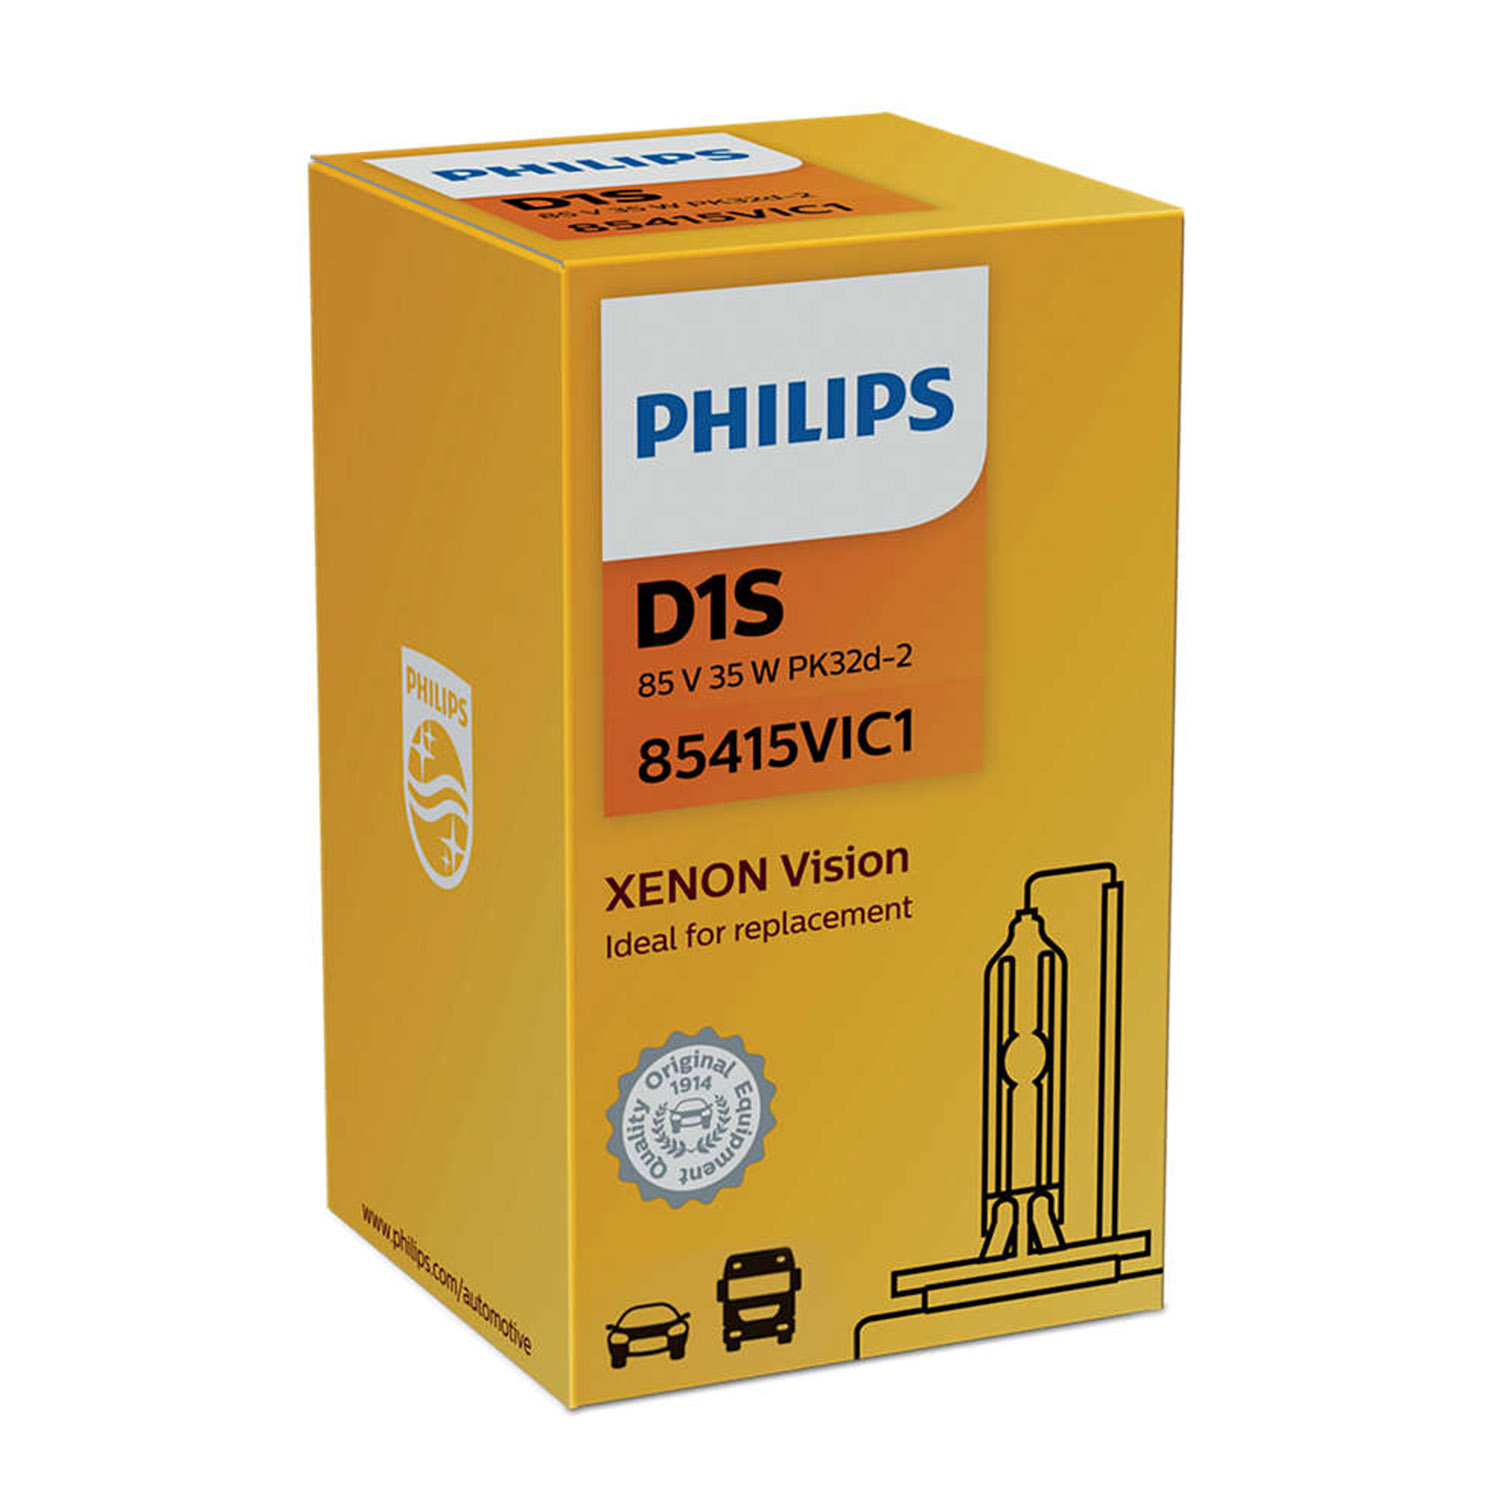 Buy Philips Xenon Bulb D1S 85V 35W 85415VIC1 - German Parts